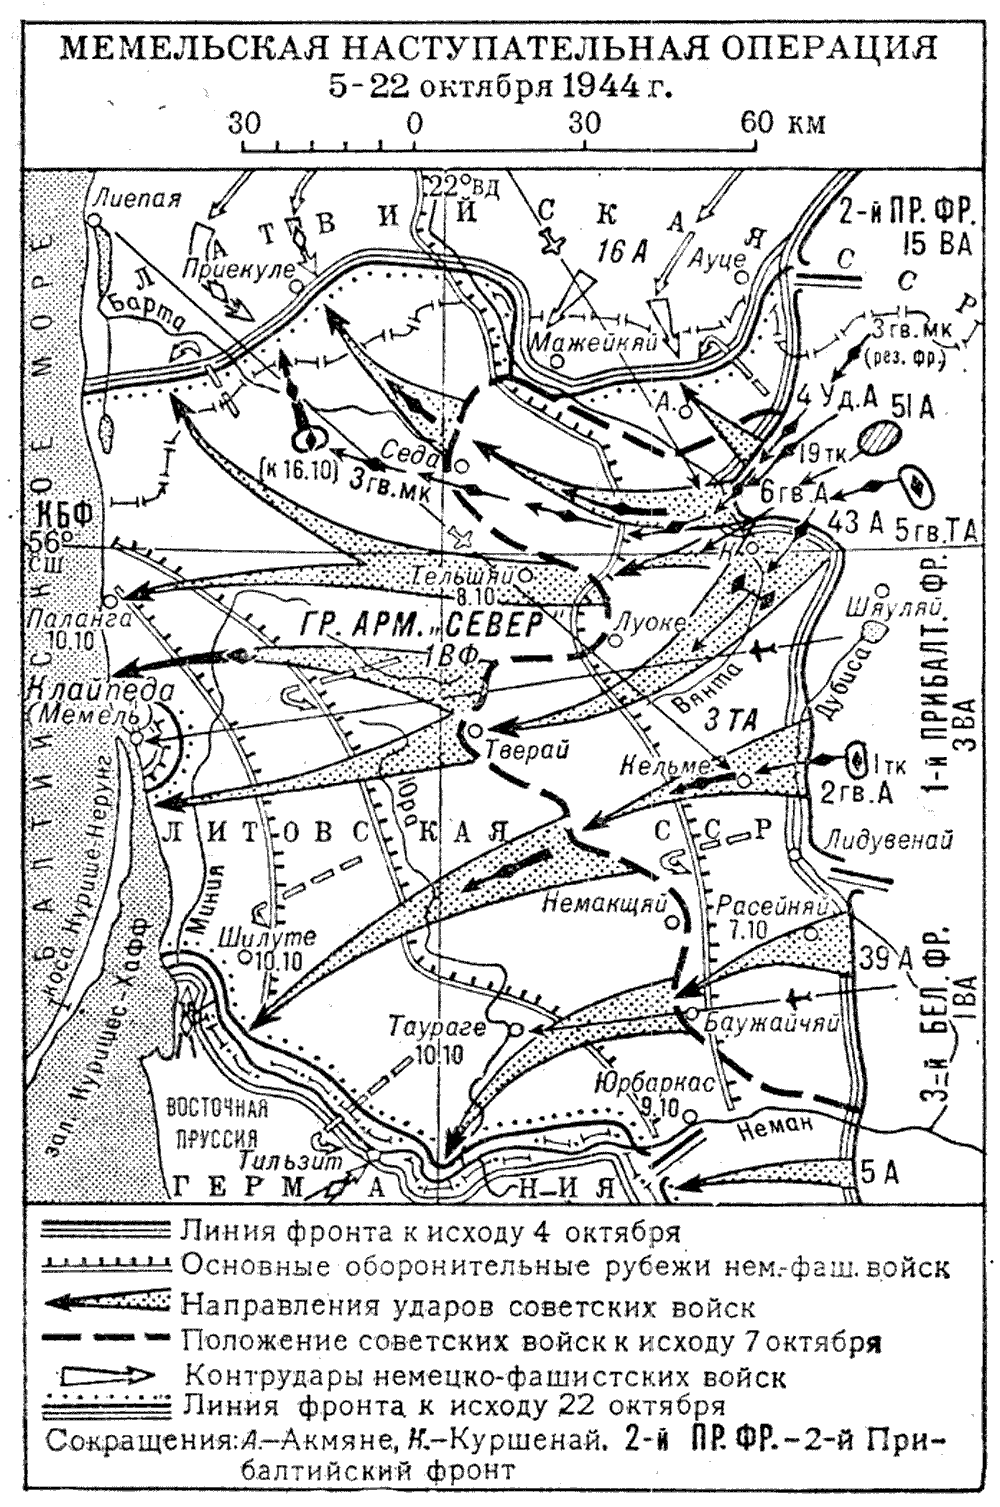 Операция 43 года. Мемельская наступательная операция 1944 года. Мемельская наступательная операция 1944 года карта. Прибалтийская операция 1944 Мемельская операция. Мемельская операция (5—22 октября 1944 года).